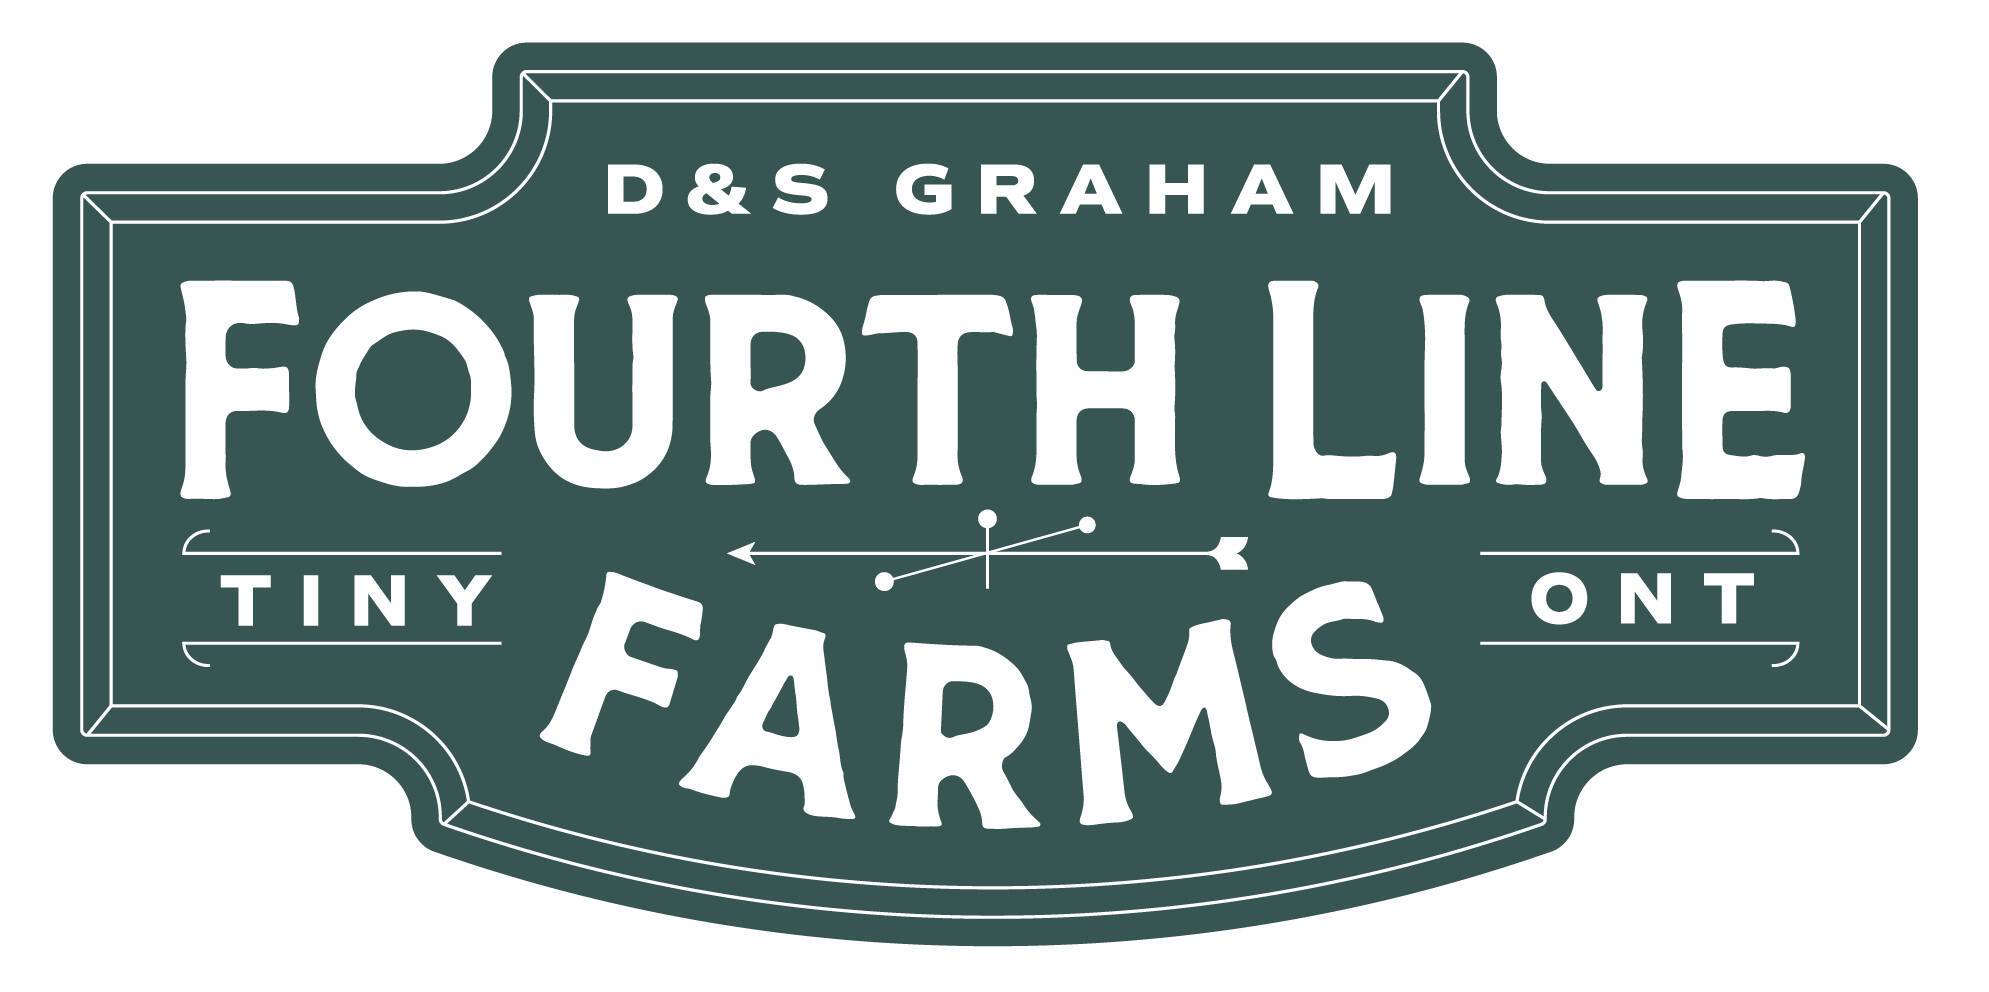 Fourth Line Farms